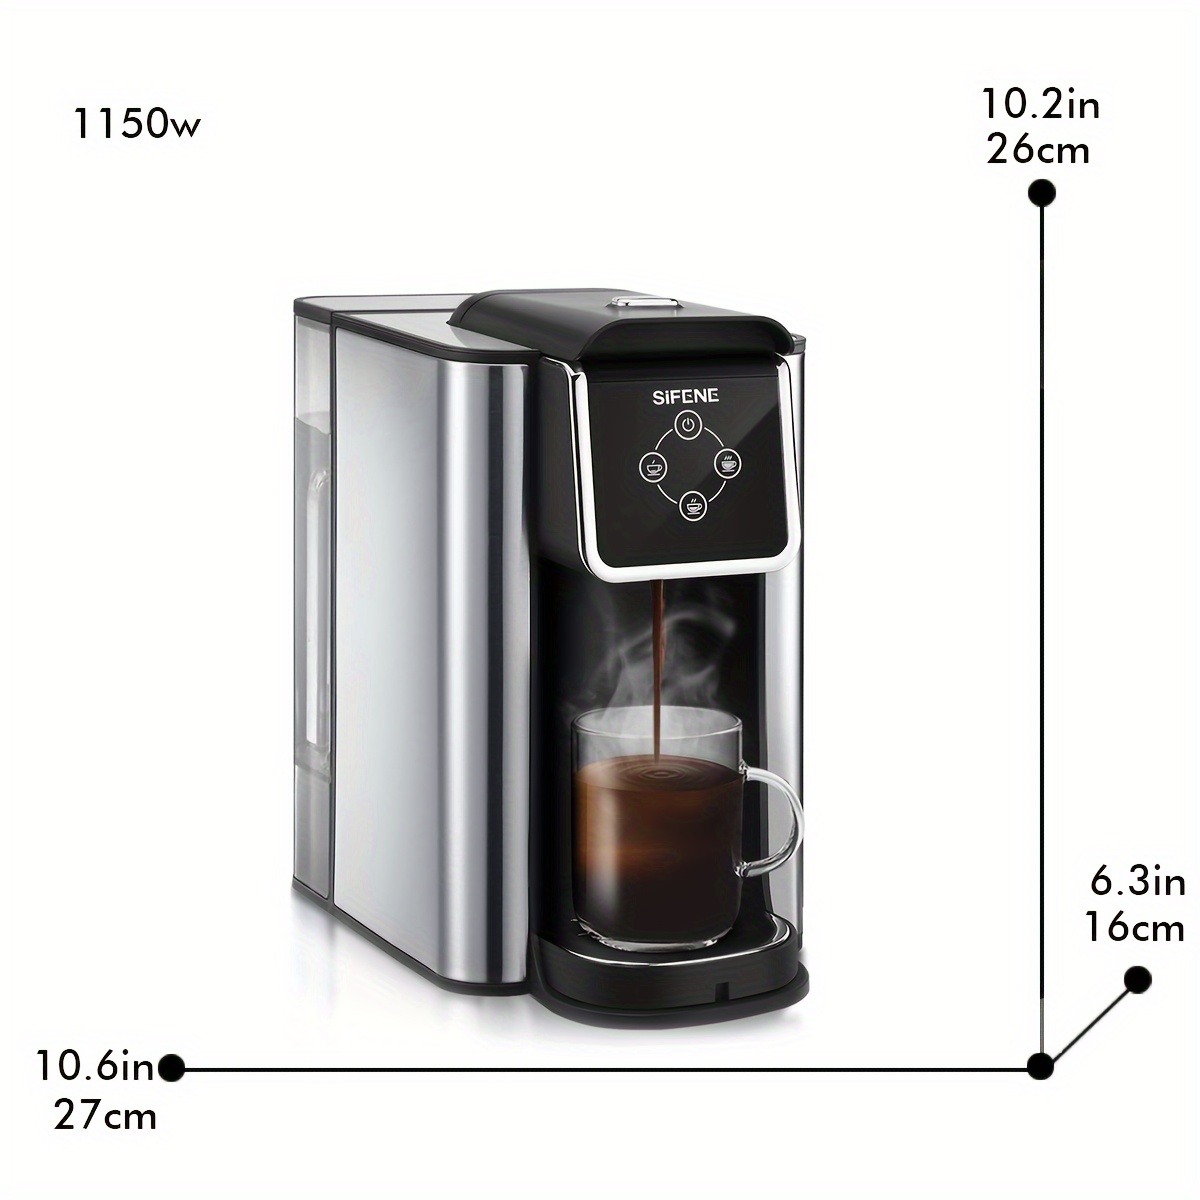 SIFENE Single Serve Coffee Machines